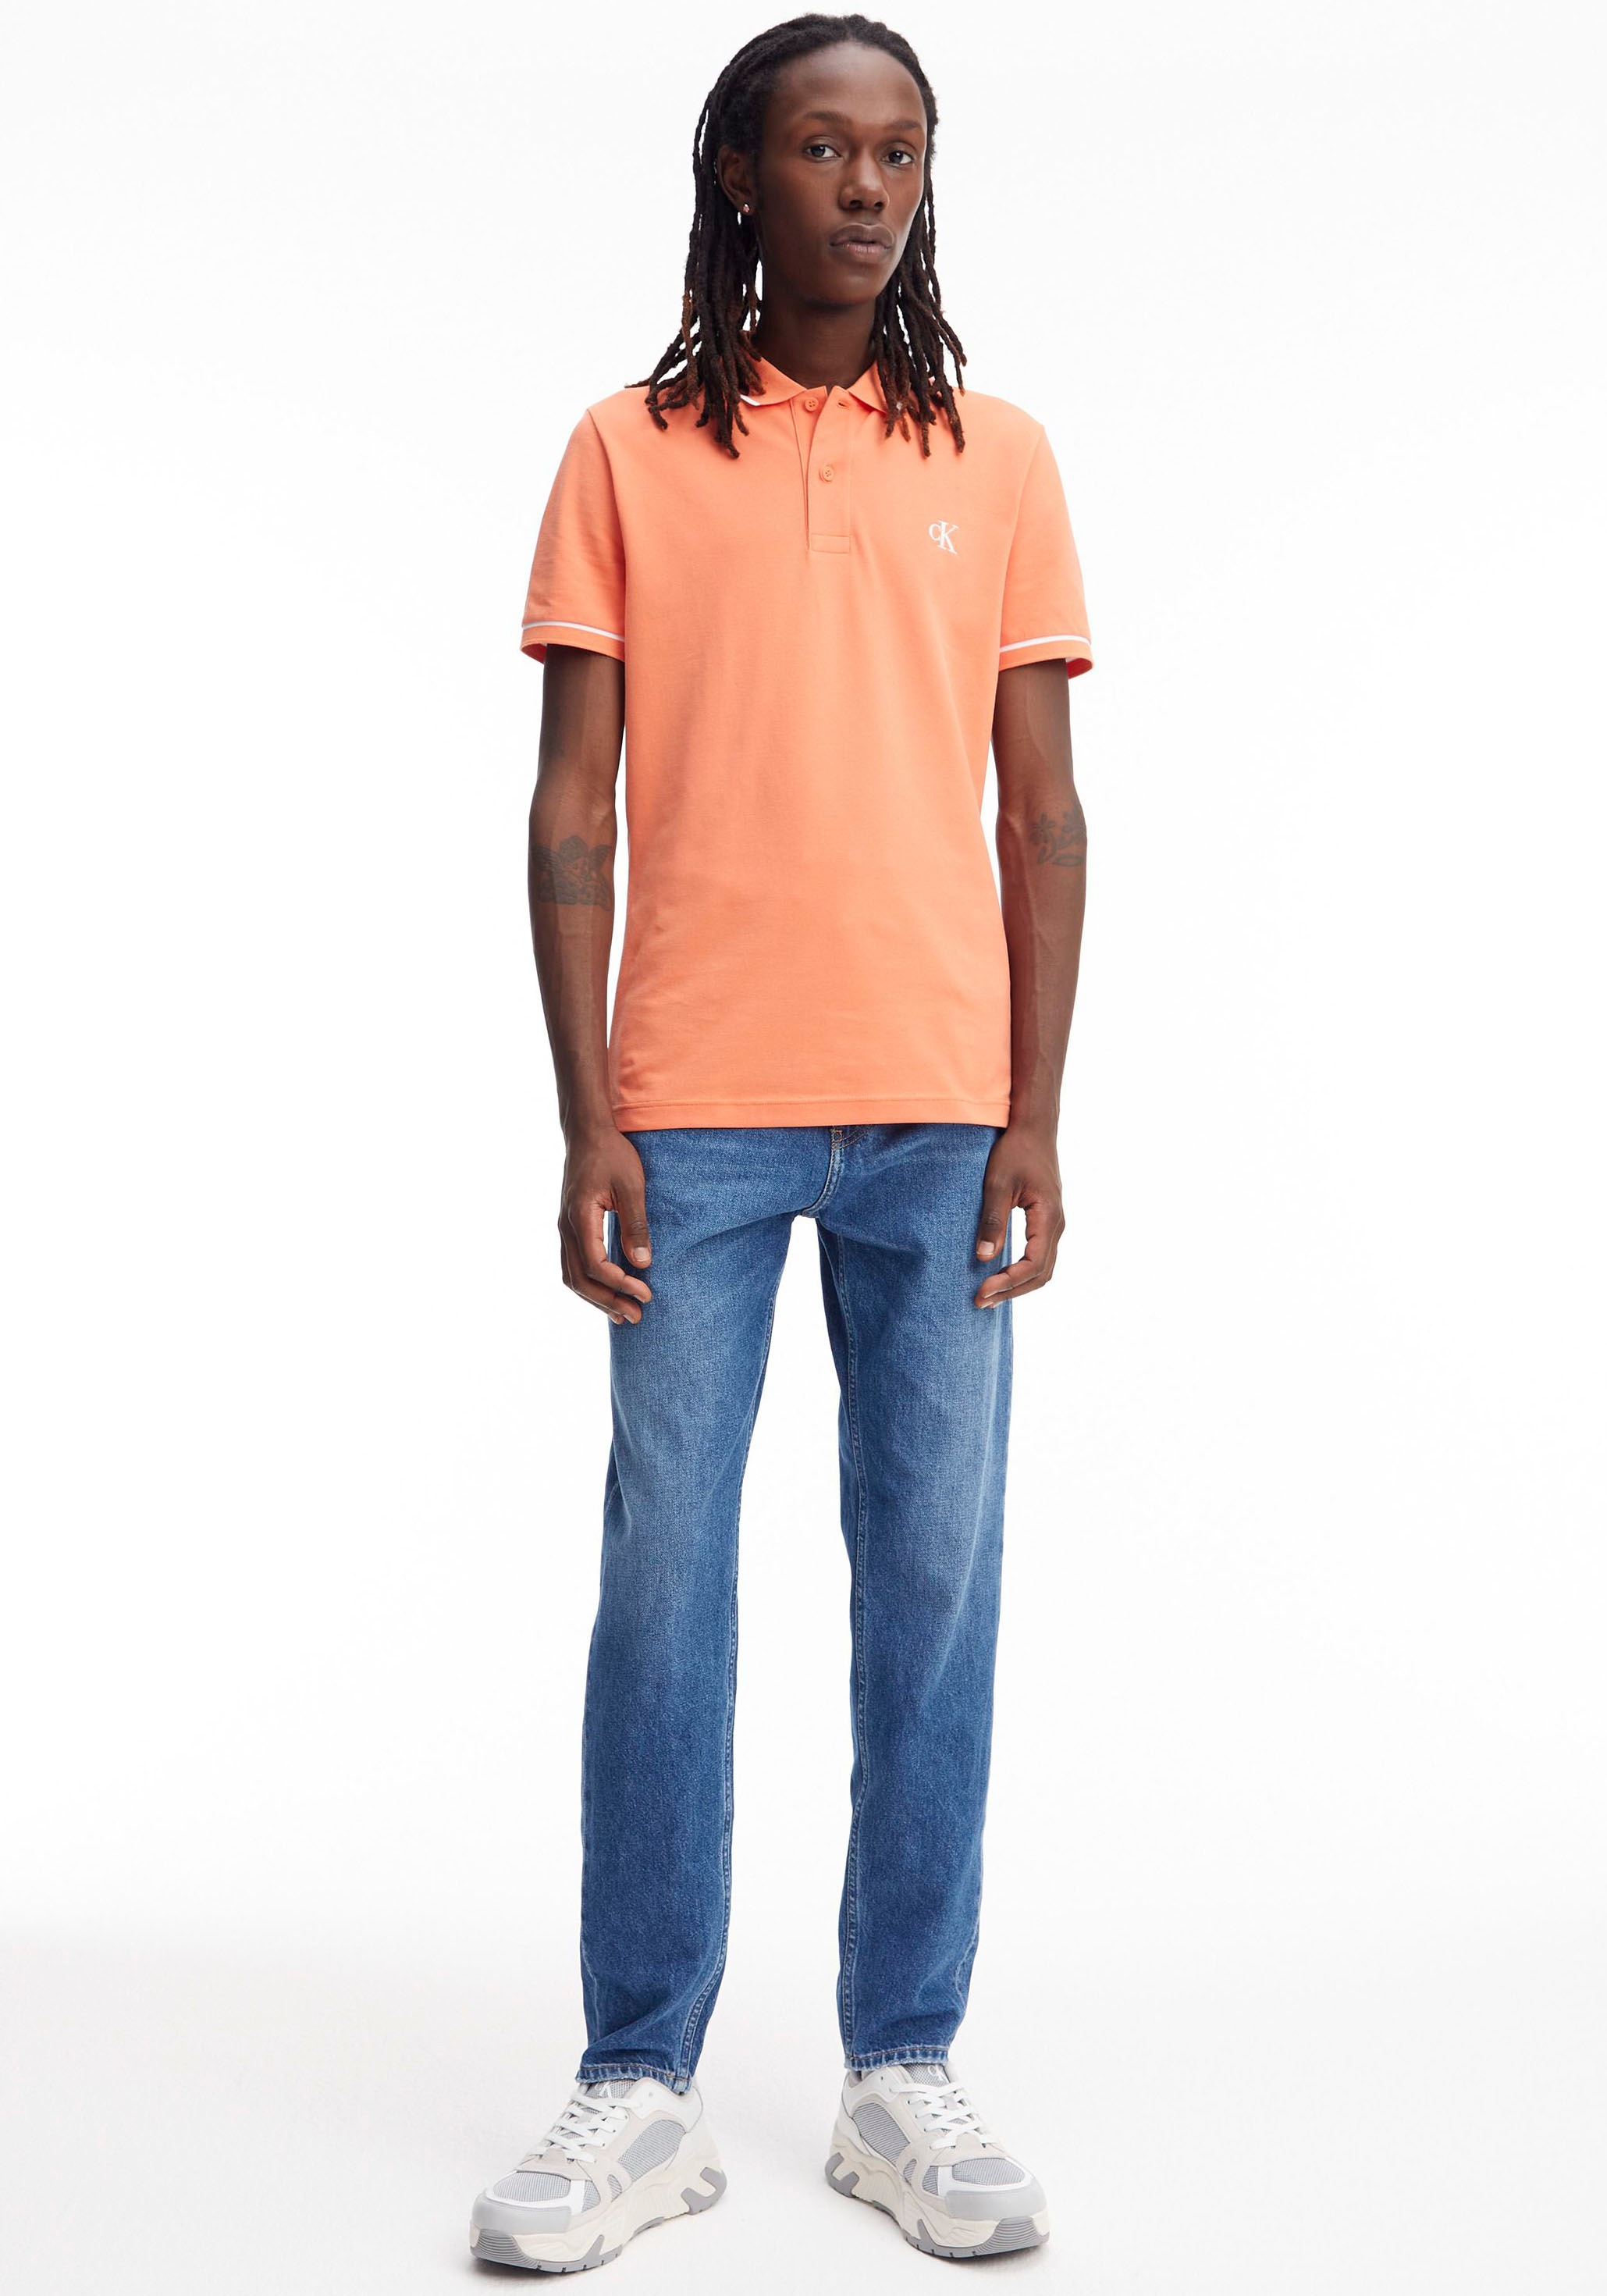 Calvin Klein Jeans Calvin KLEIN Džinsai Polo marškinėliai...